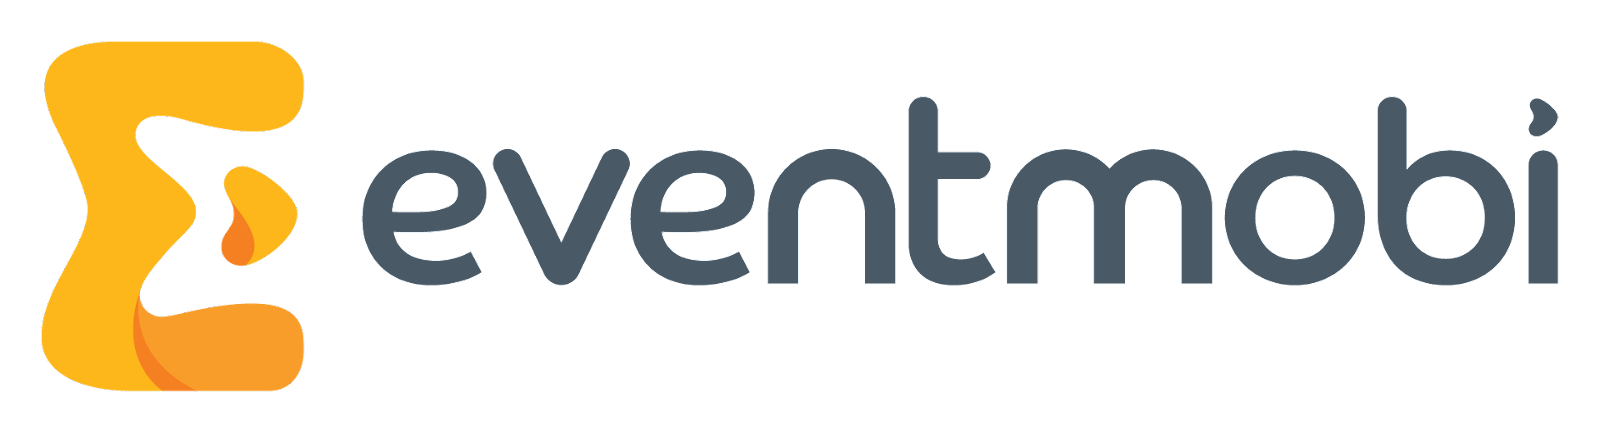 The logo for EventMobi, the best event management software